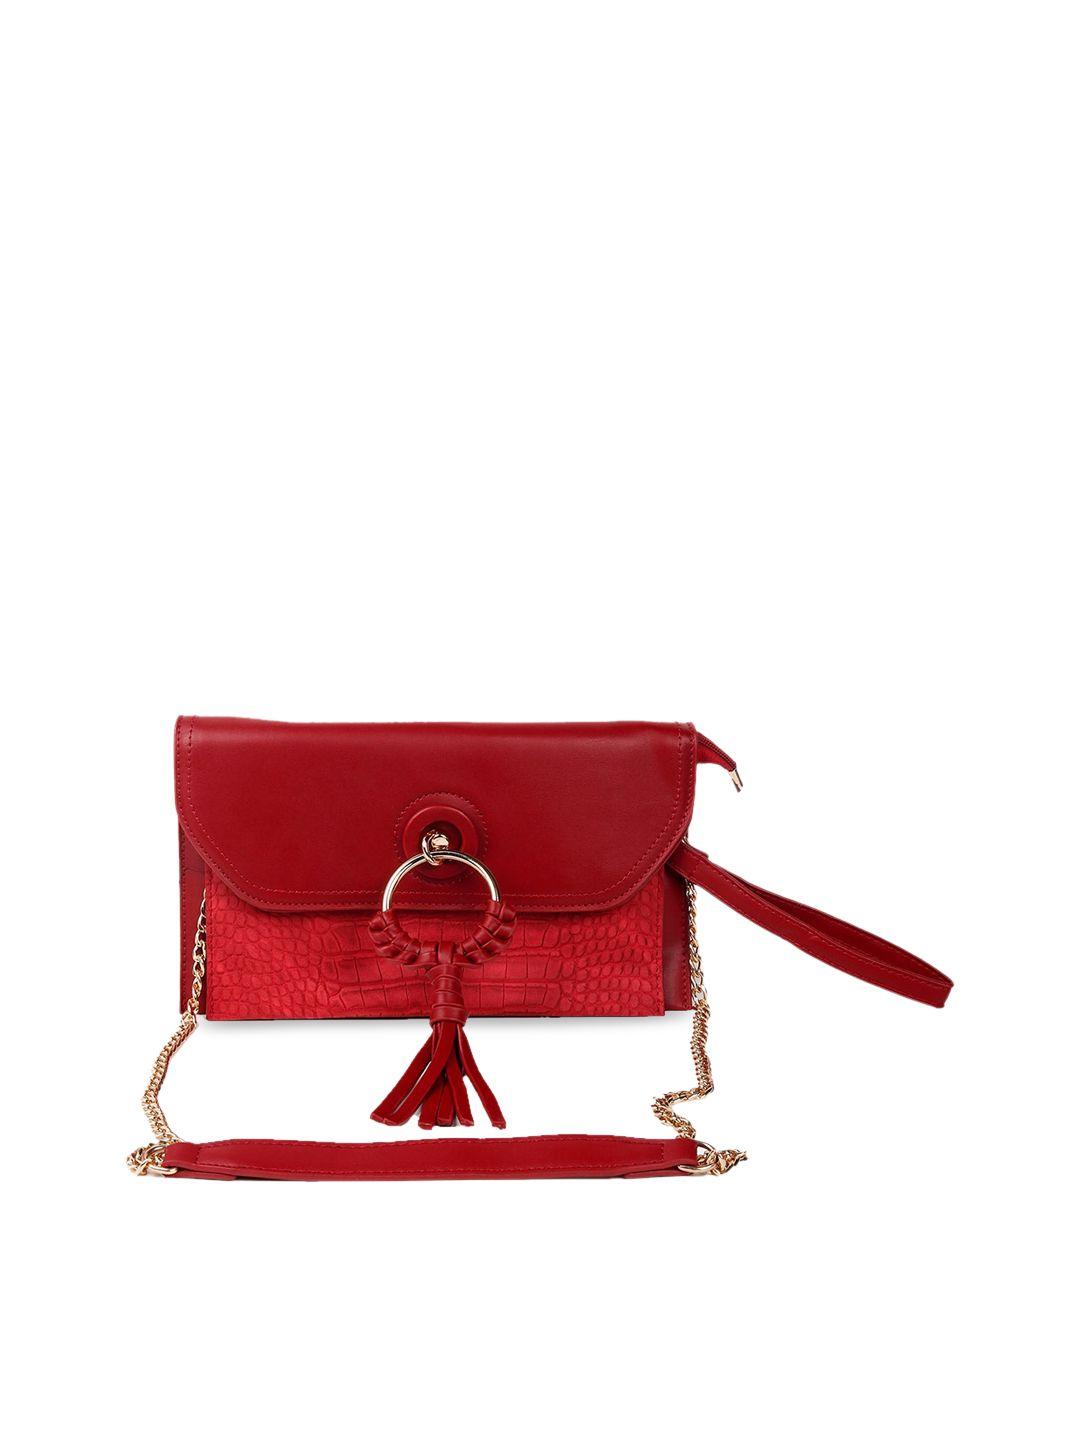 odette red textured structured sling bag with tasselled